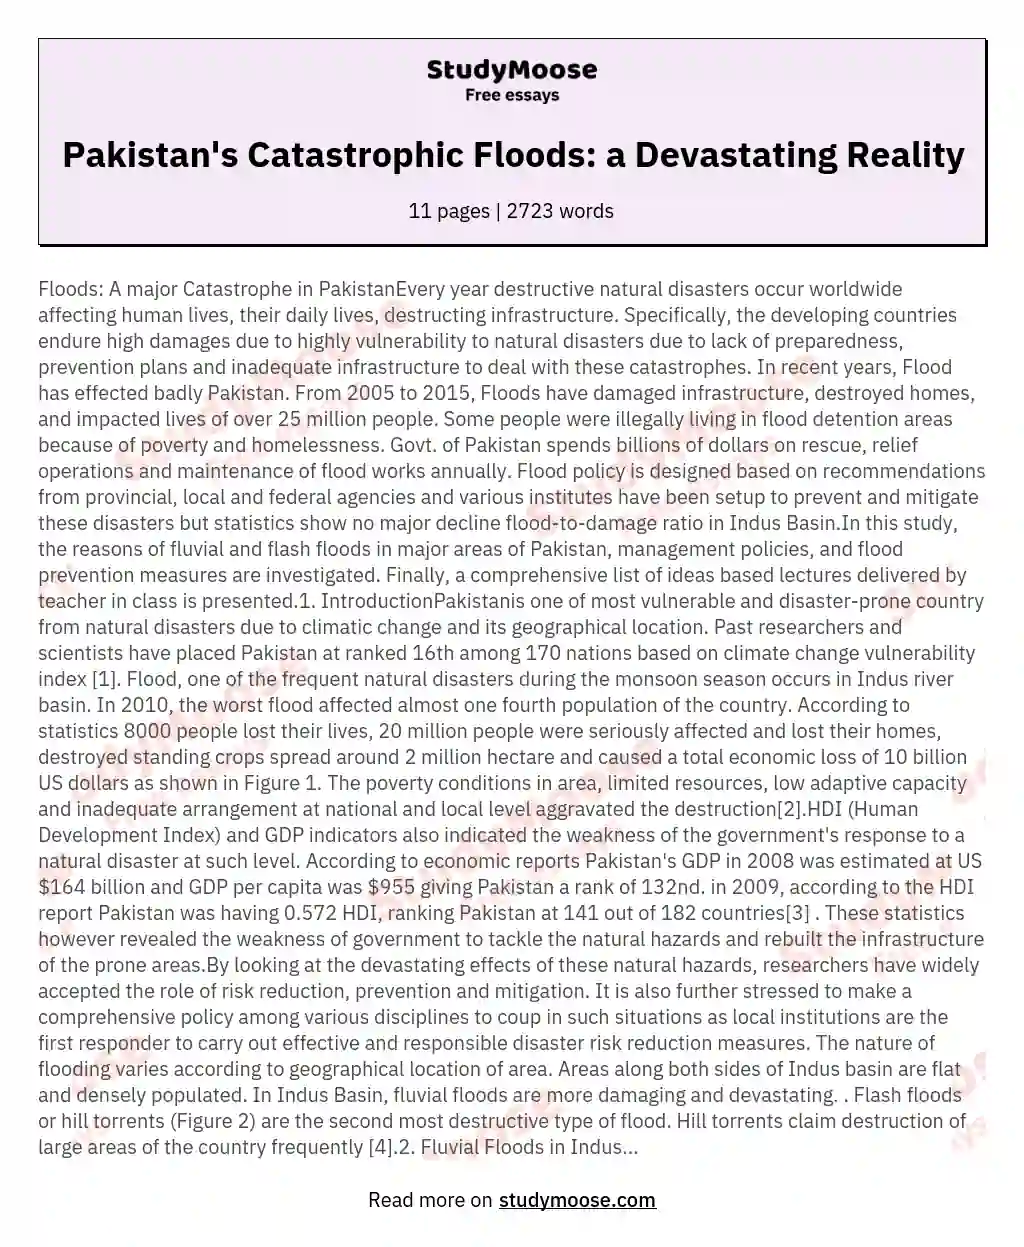 Pakistan's Catastrophic Floods: a Devastating Reality essay